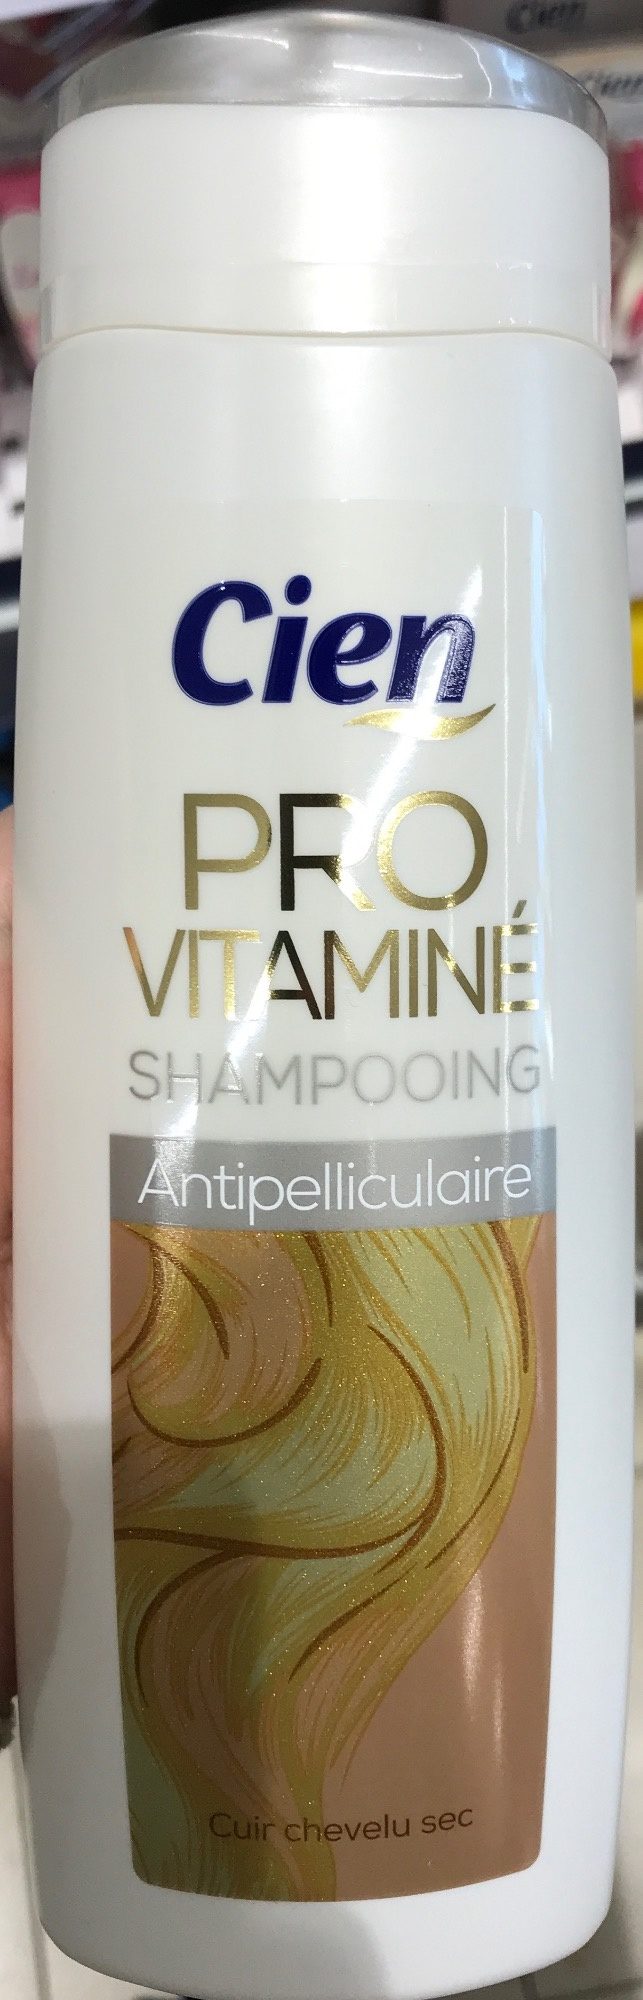 Provitaminé Shampooing Antipelliculaire - Produit - fr